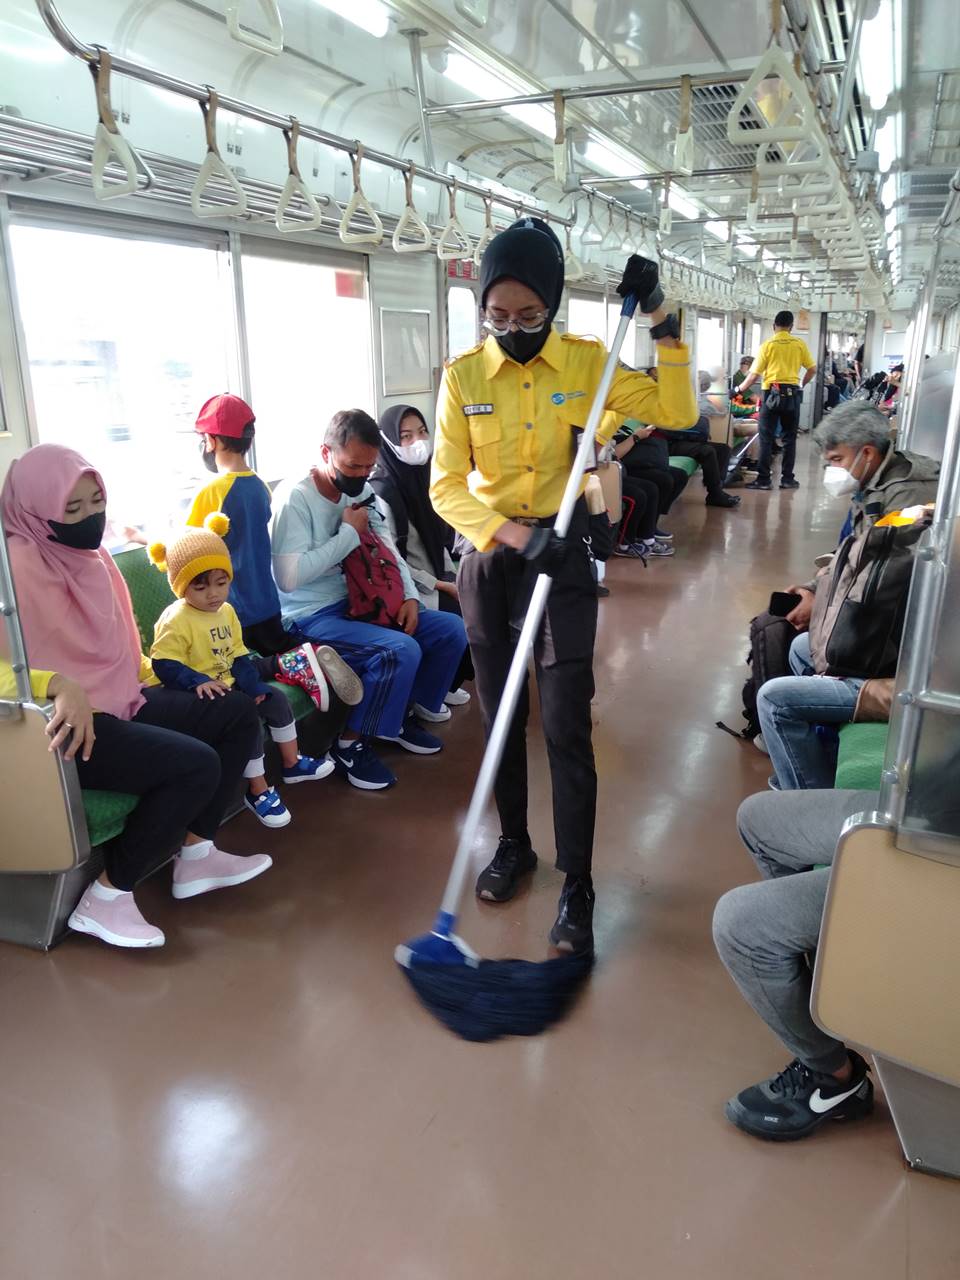 Cleaning Service Officers on Duty - Bogor-Jakarta Commuter Train